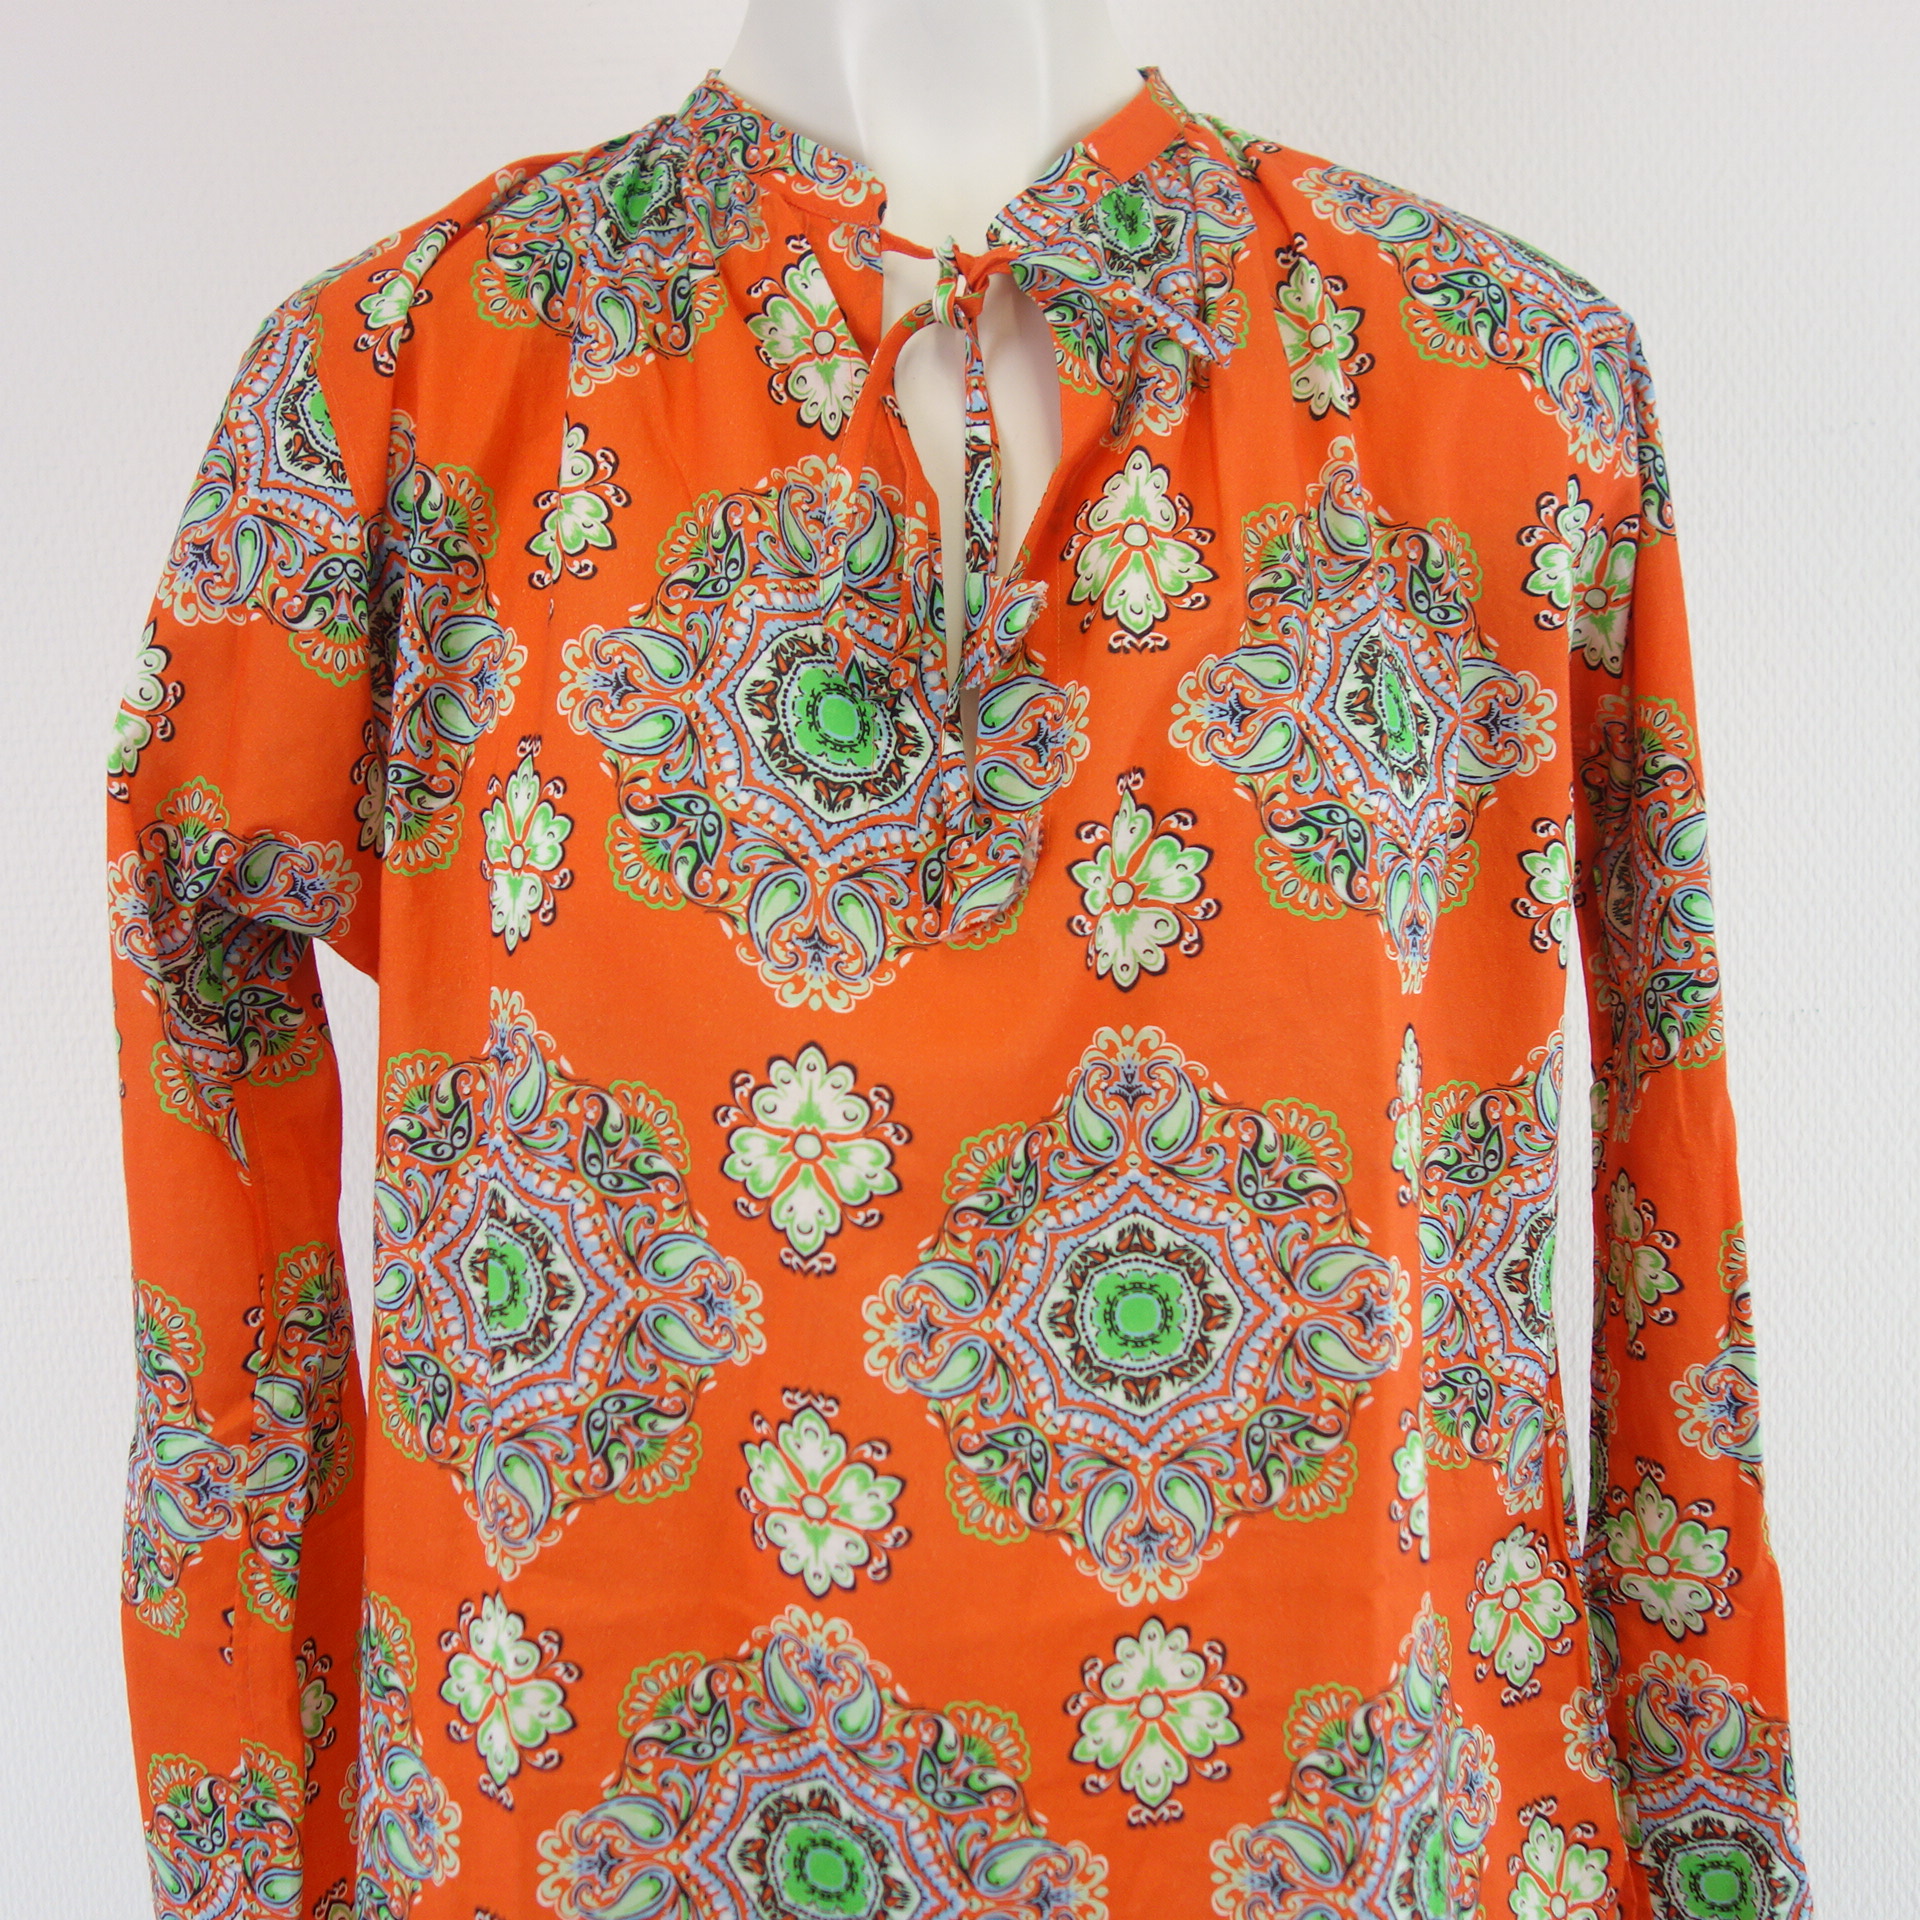 CALIBAN Damen Bluse Hemd Tunika Shirt Bunt 100% Baumwolle Langarm